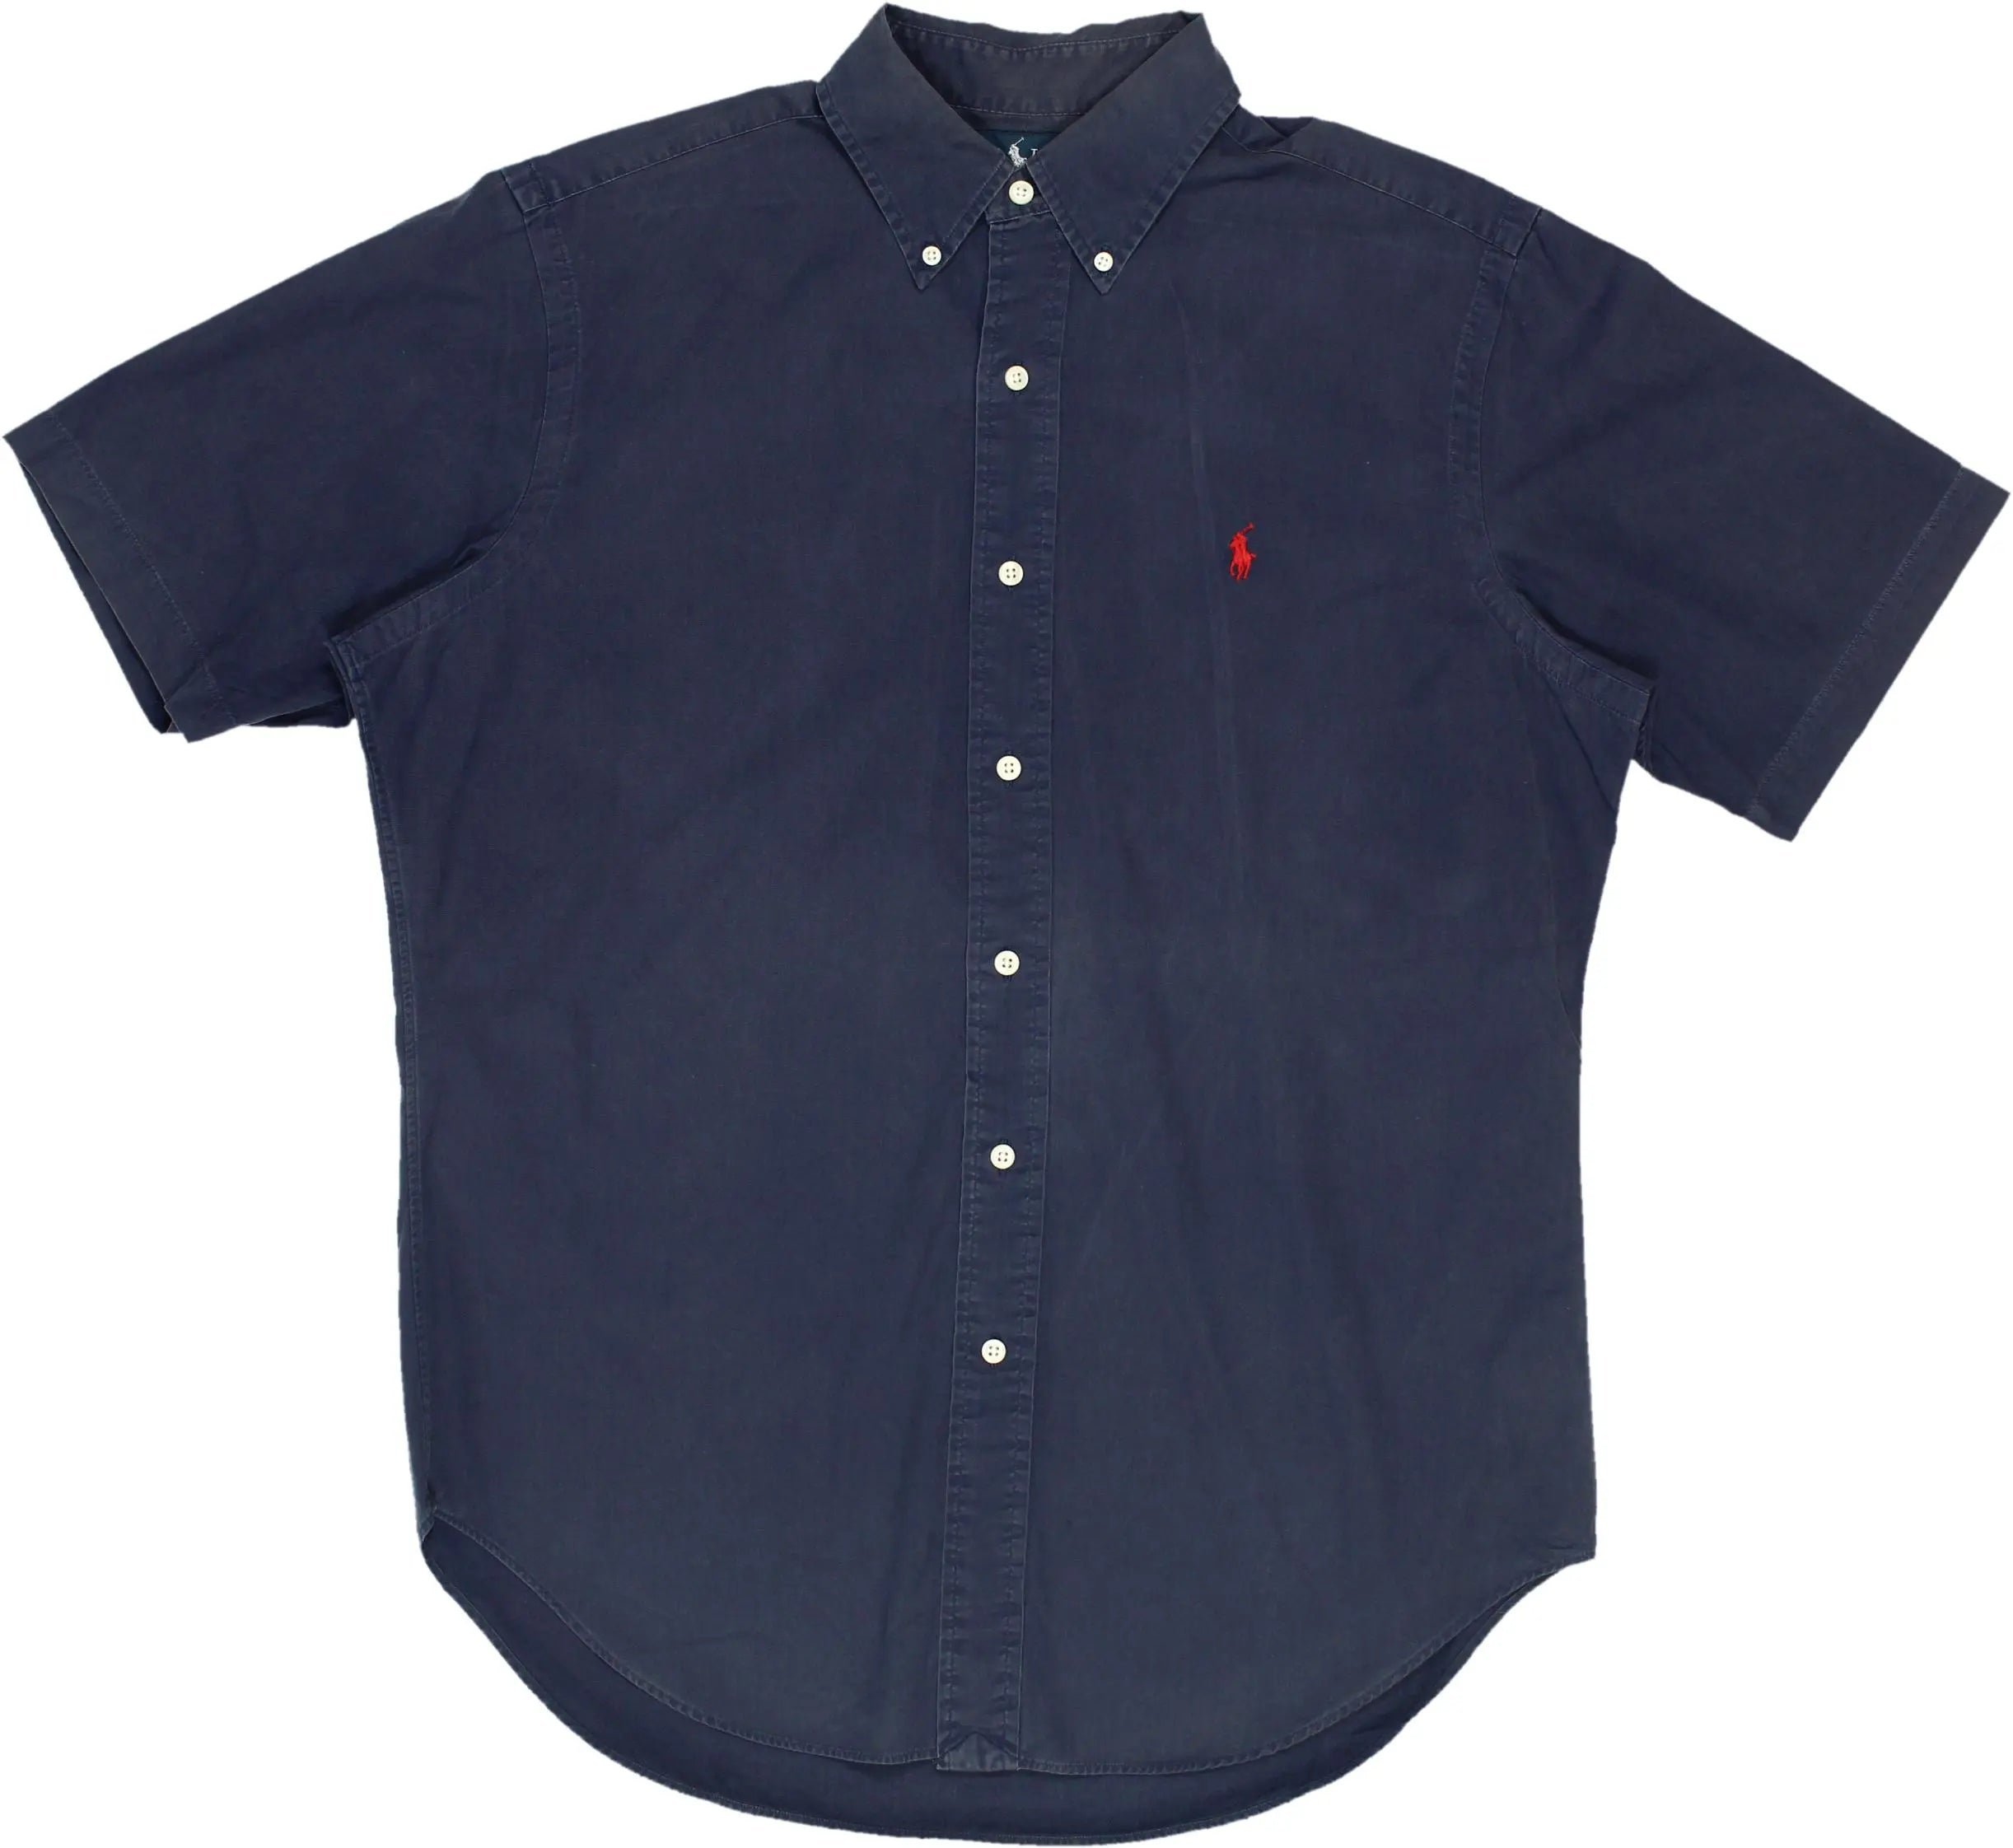 Ralph Lauren - Blue Short Sleeve Shirt by Ralph Lauren- ThriftTale.com - Vintage and second handclothing